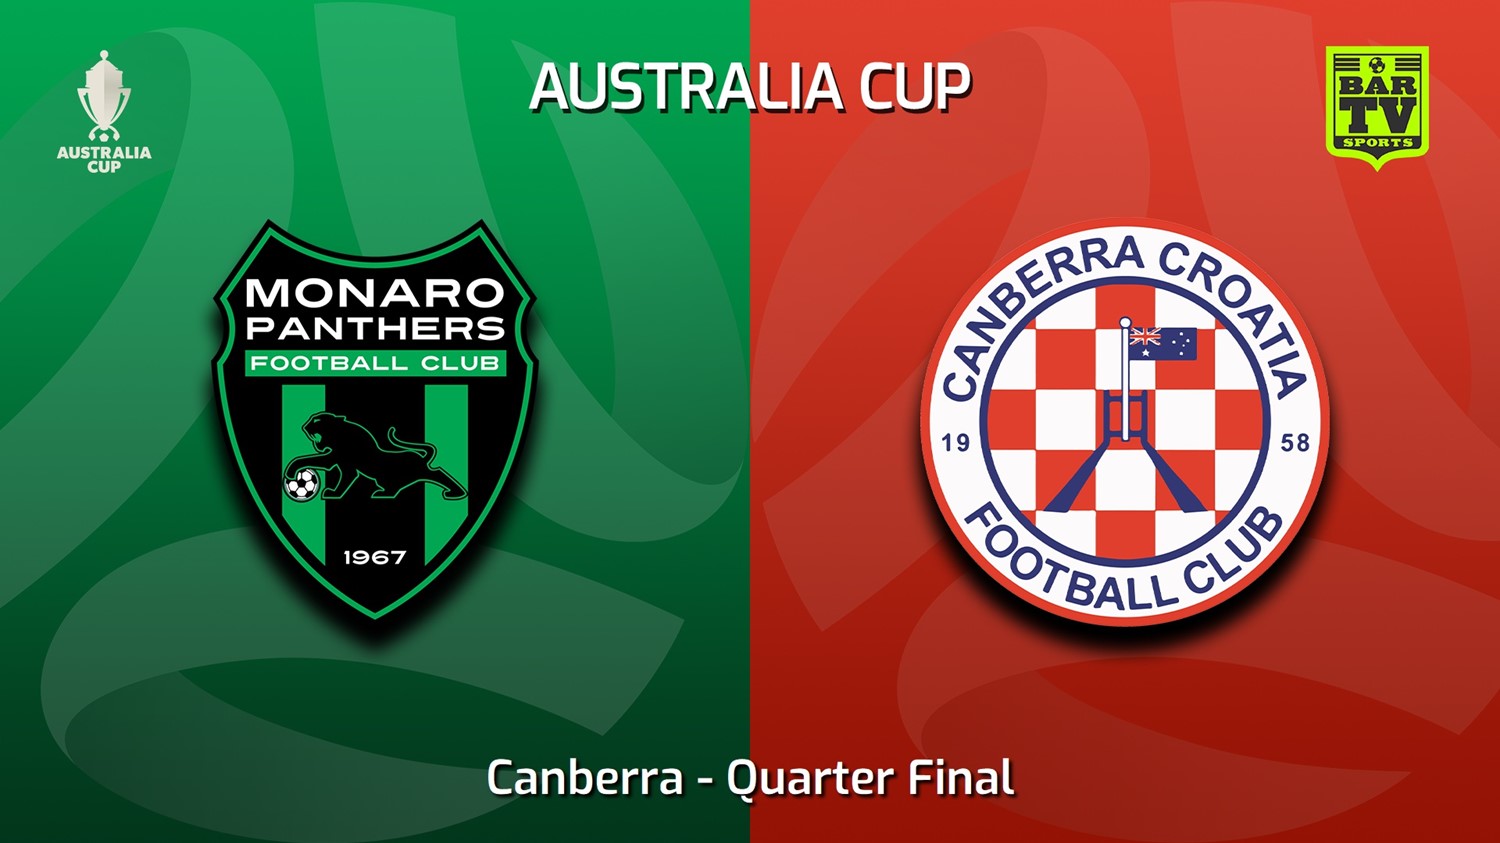 230418-Australia Cup Qualifying Canberra Quarter Final - Monaro Panthers v Canberra Croatia FC Minigame Slate Image